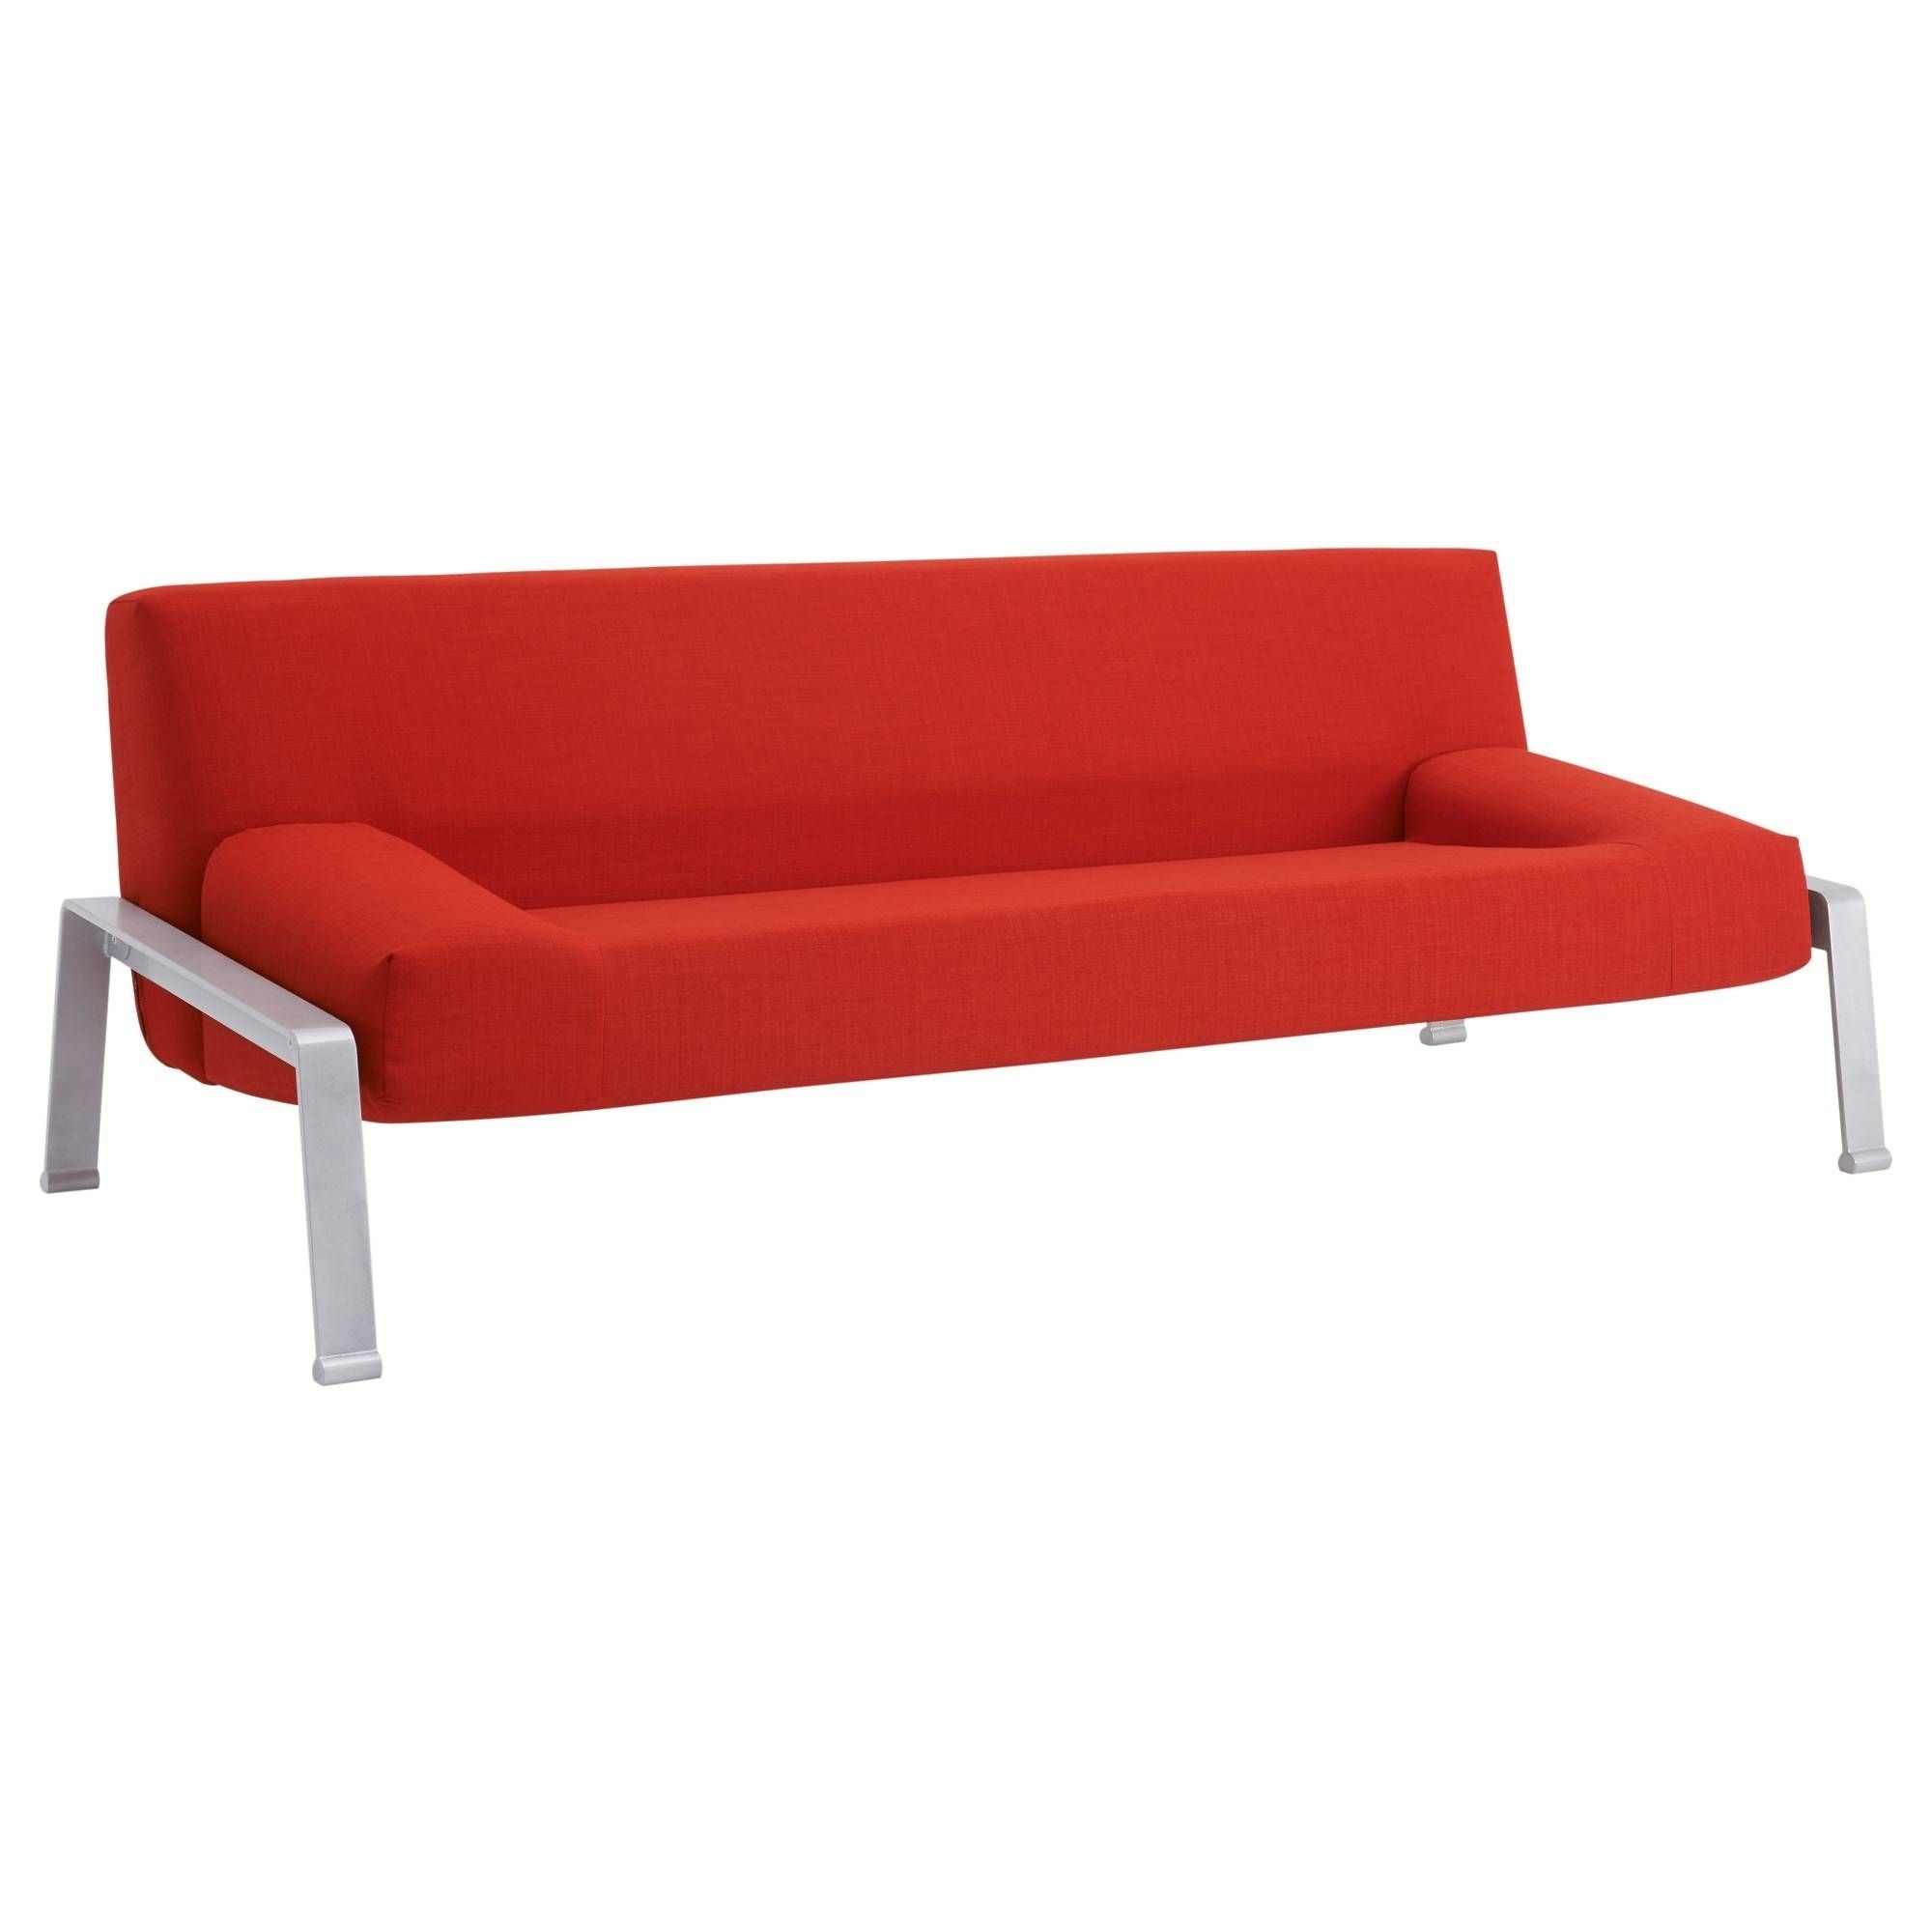 2017 Latest Red Sofa Beds Ikea